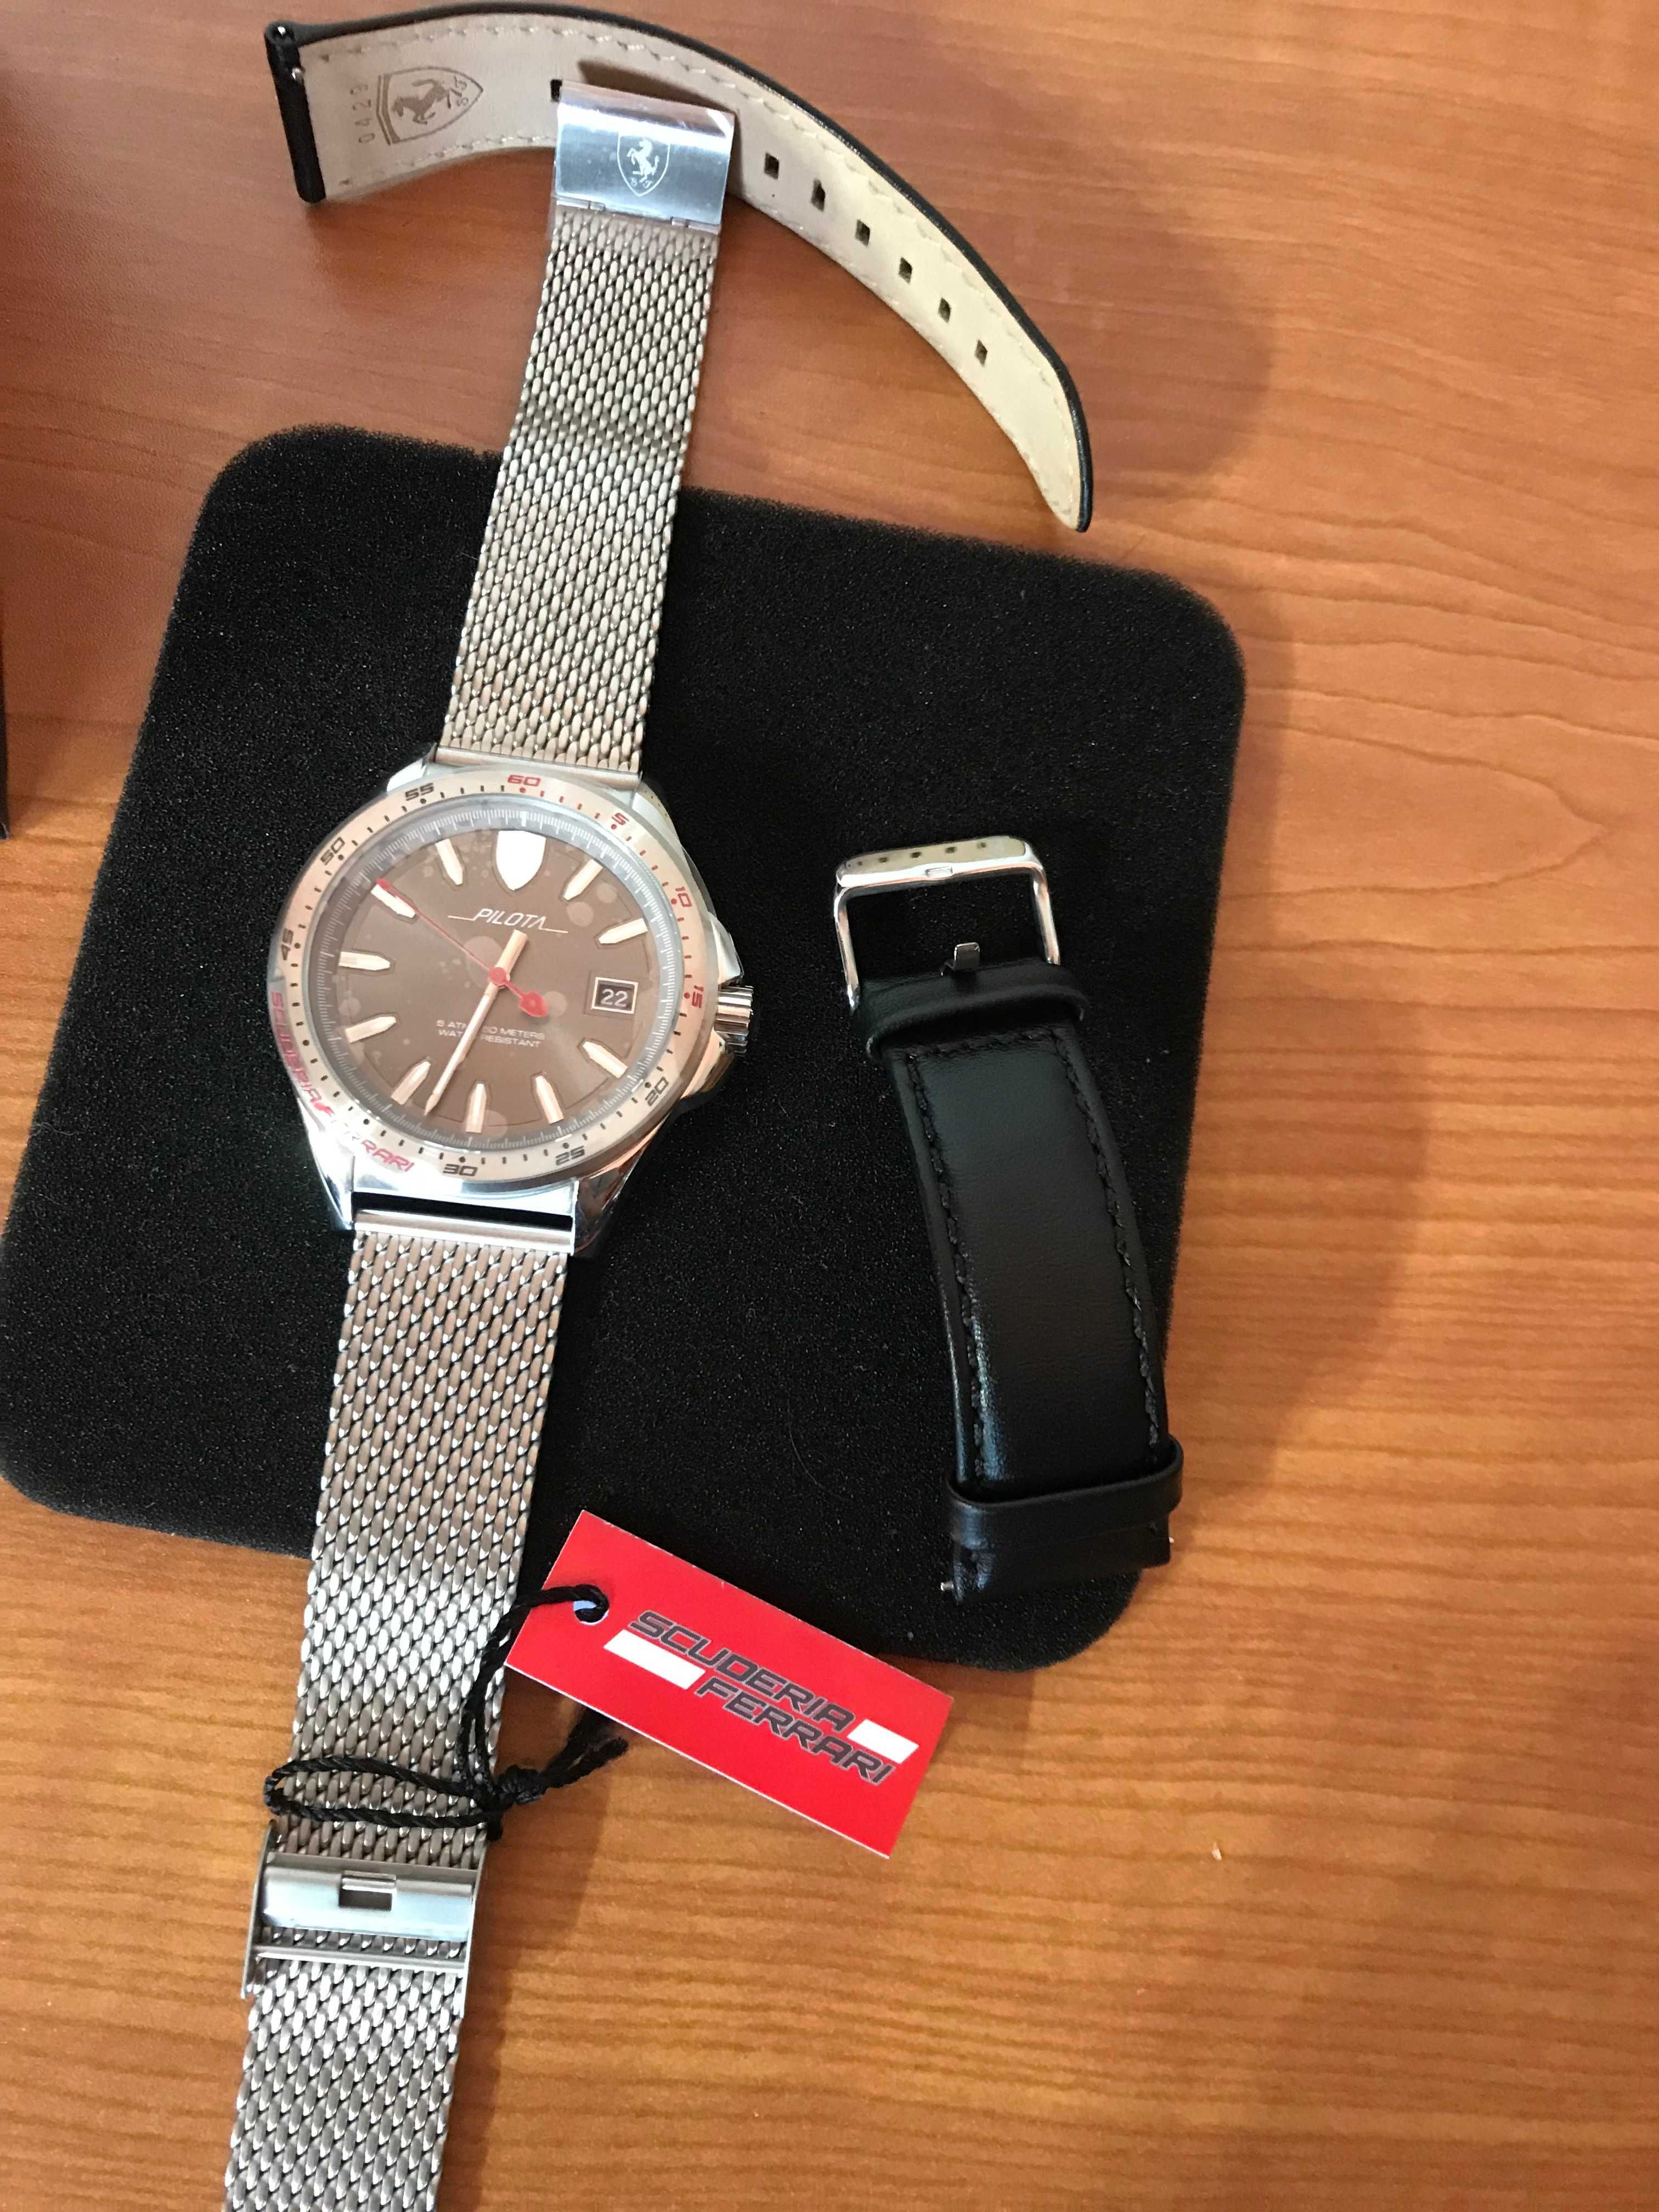 Relógio Ferrari + Oferta Extra de Bracelete Pele Preta